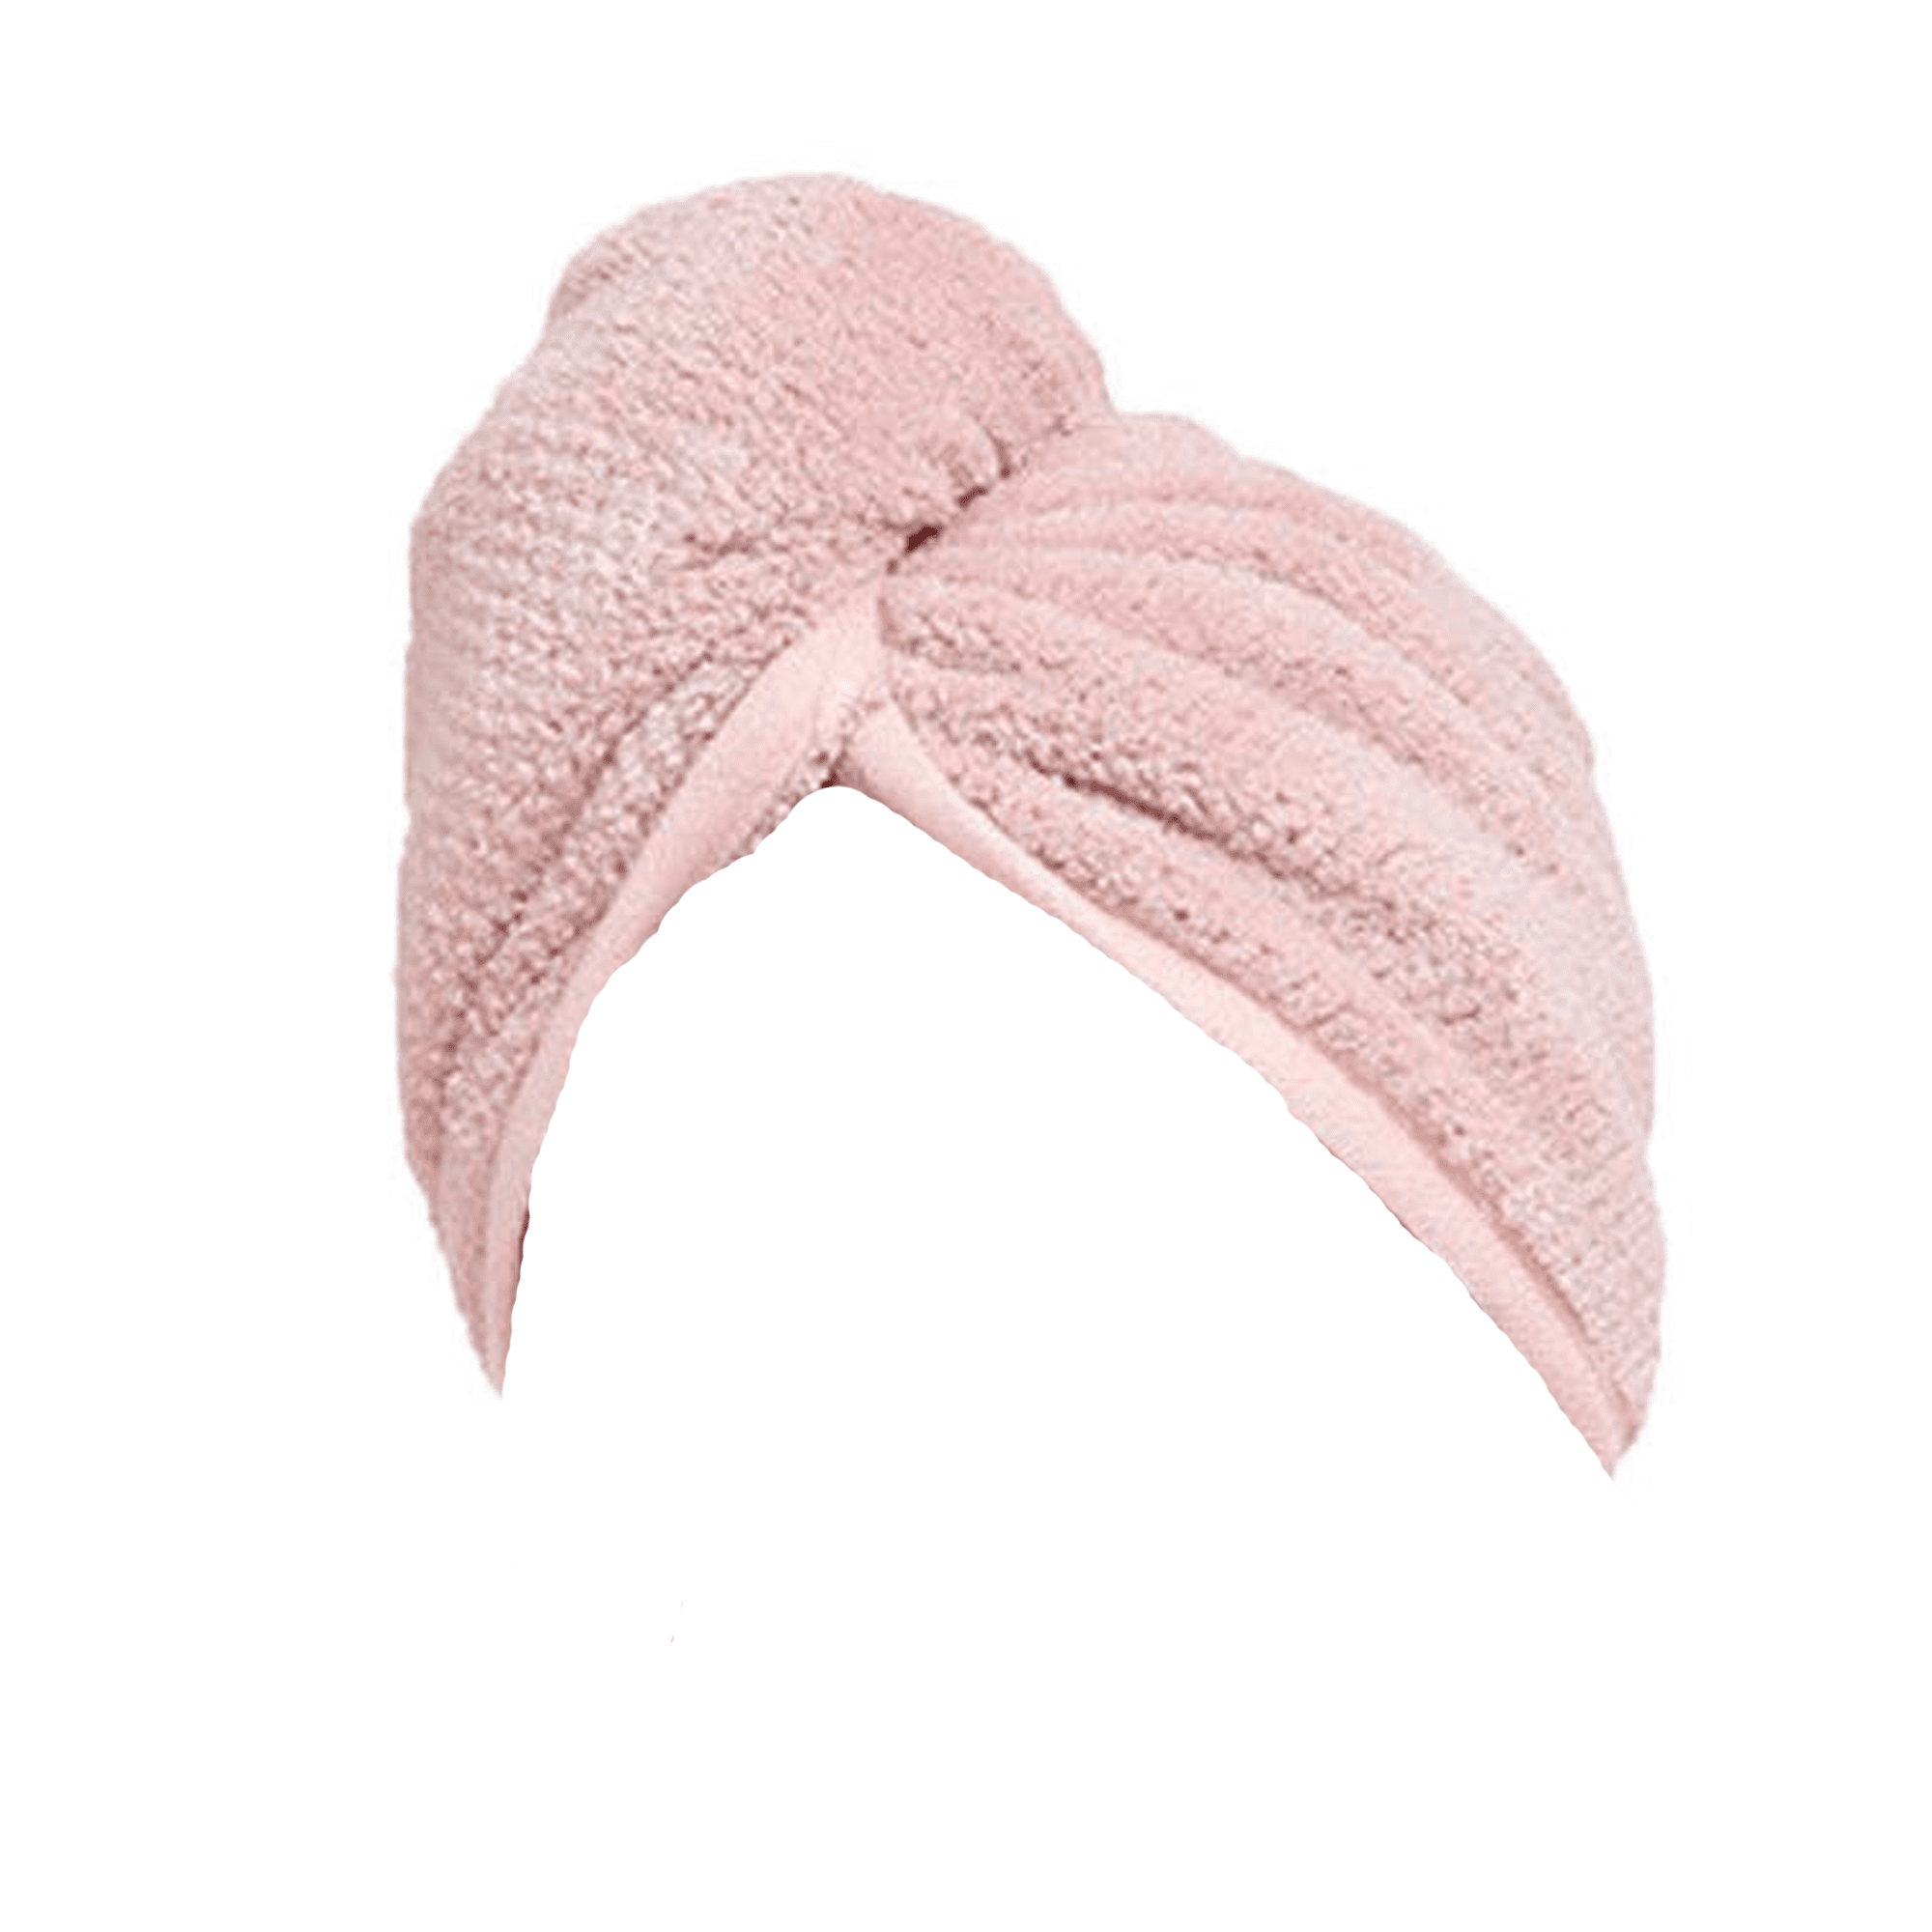 Turban Twist Dry Shower Microfiber Hair Wrap Towel Drying Bath Spa Head Cap Hats 